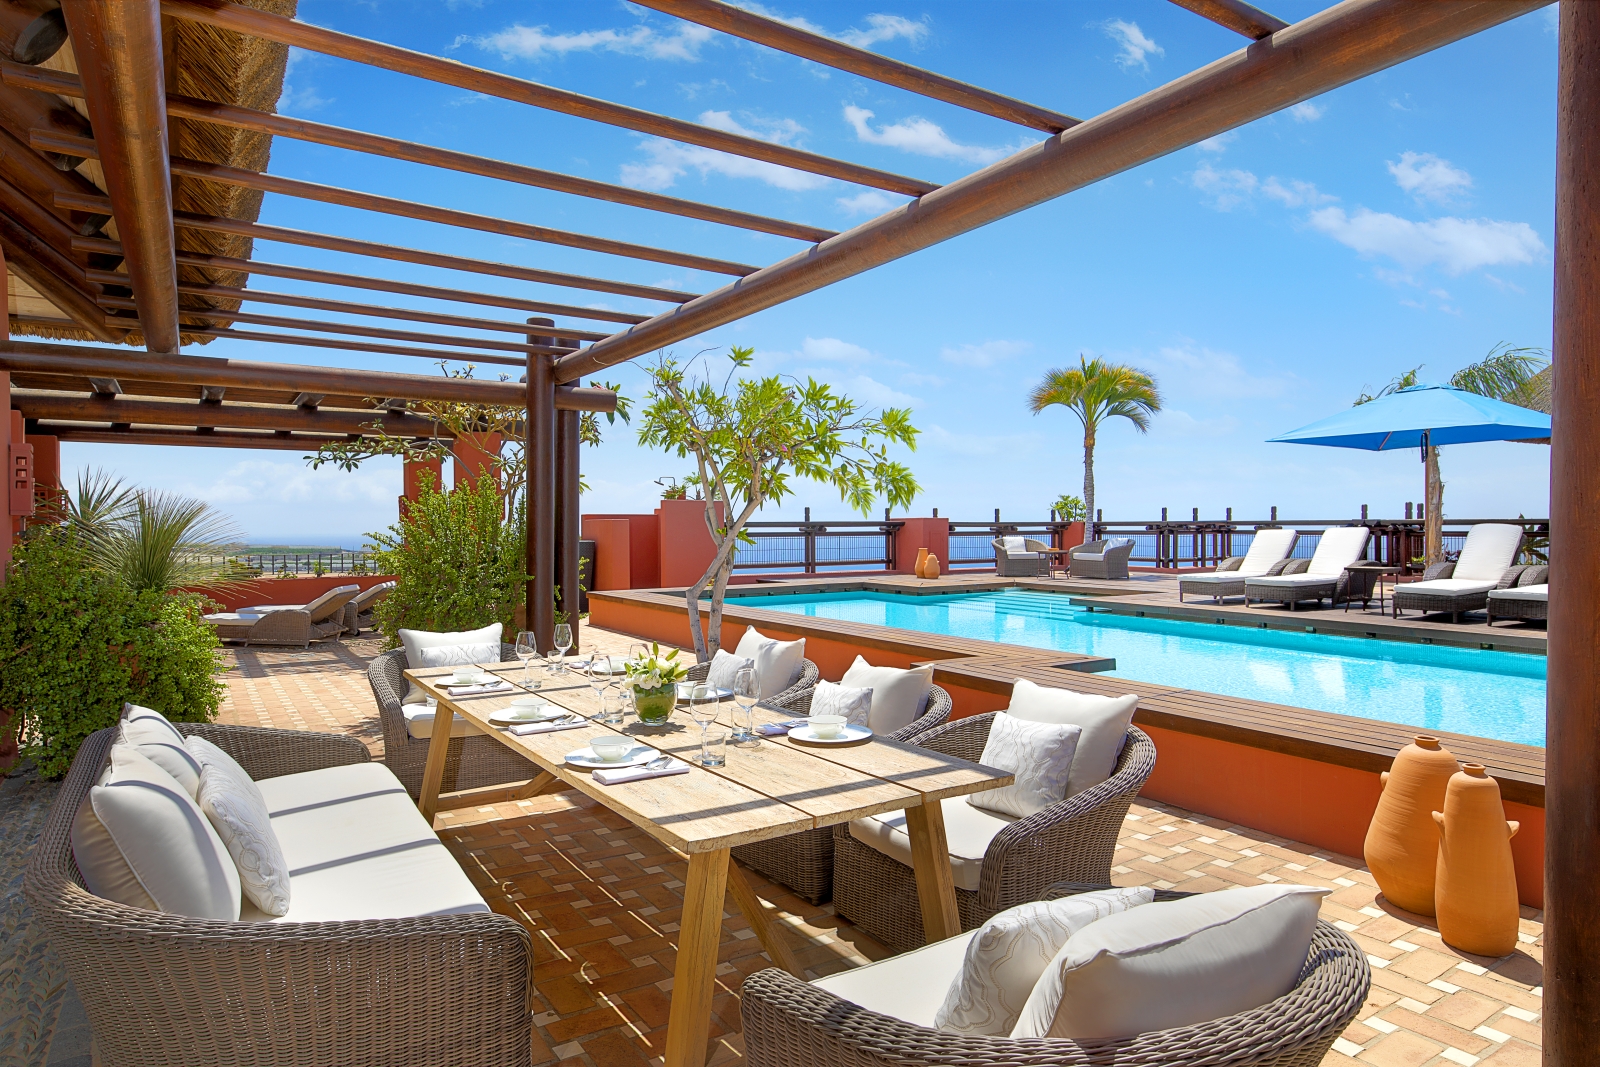 Pool-side terrace of an Imperial Suite at luxury resort Ritz Carlton Abama on Tenerife